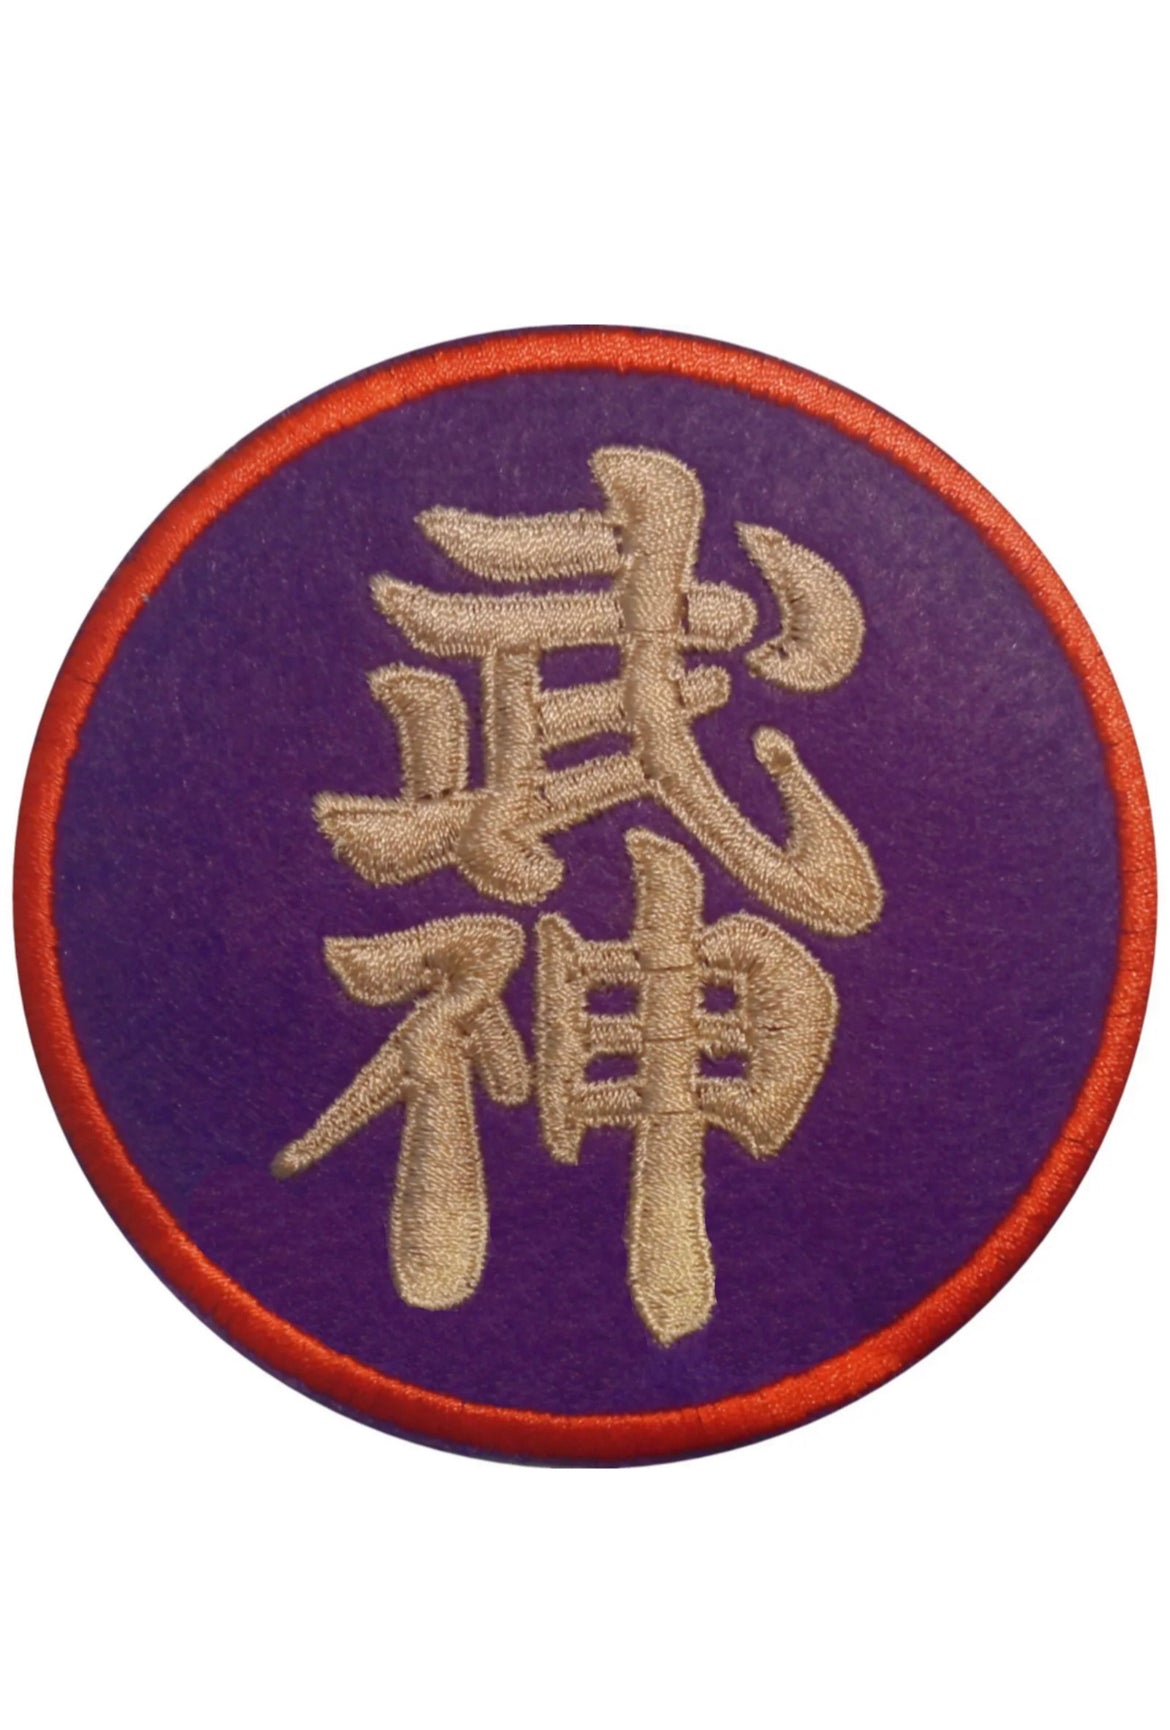 Ninjutsu Ninpo Patch (3.5 Inch) Purple Velvet Iron-on Badge BUJINKAN Taijutsu Shihan Ninja Shinobi